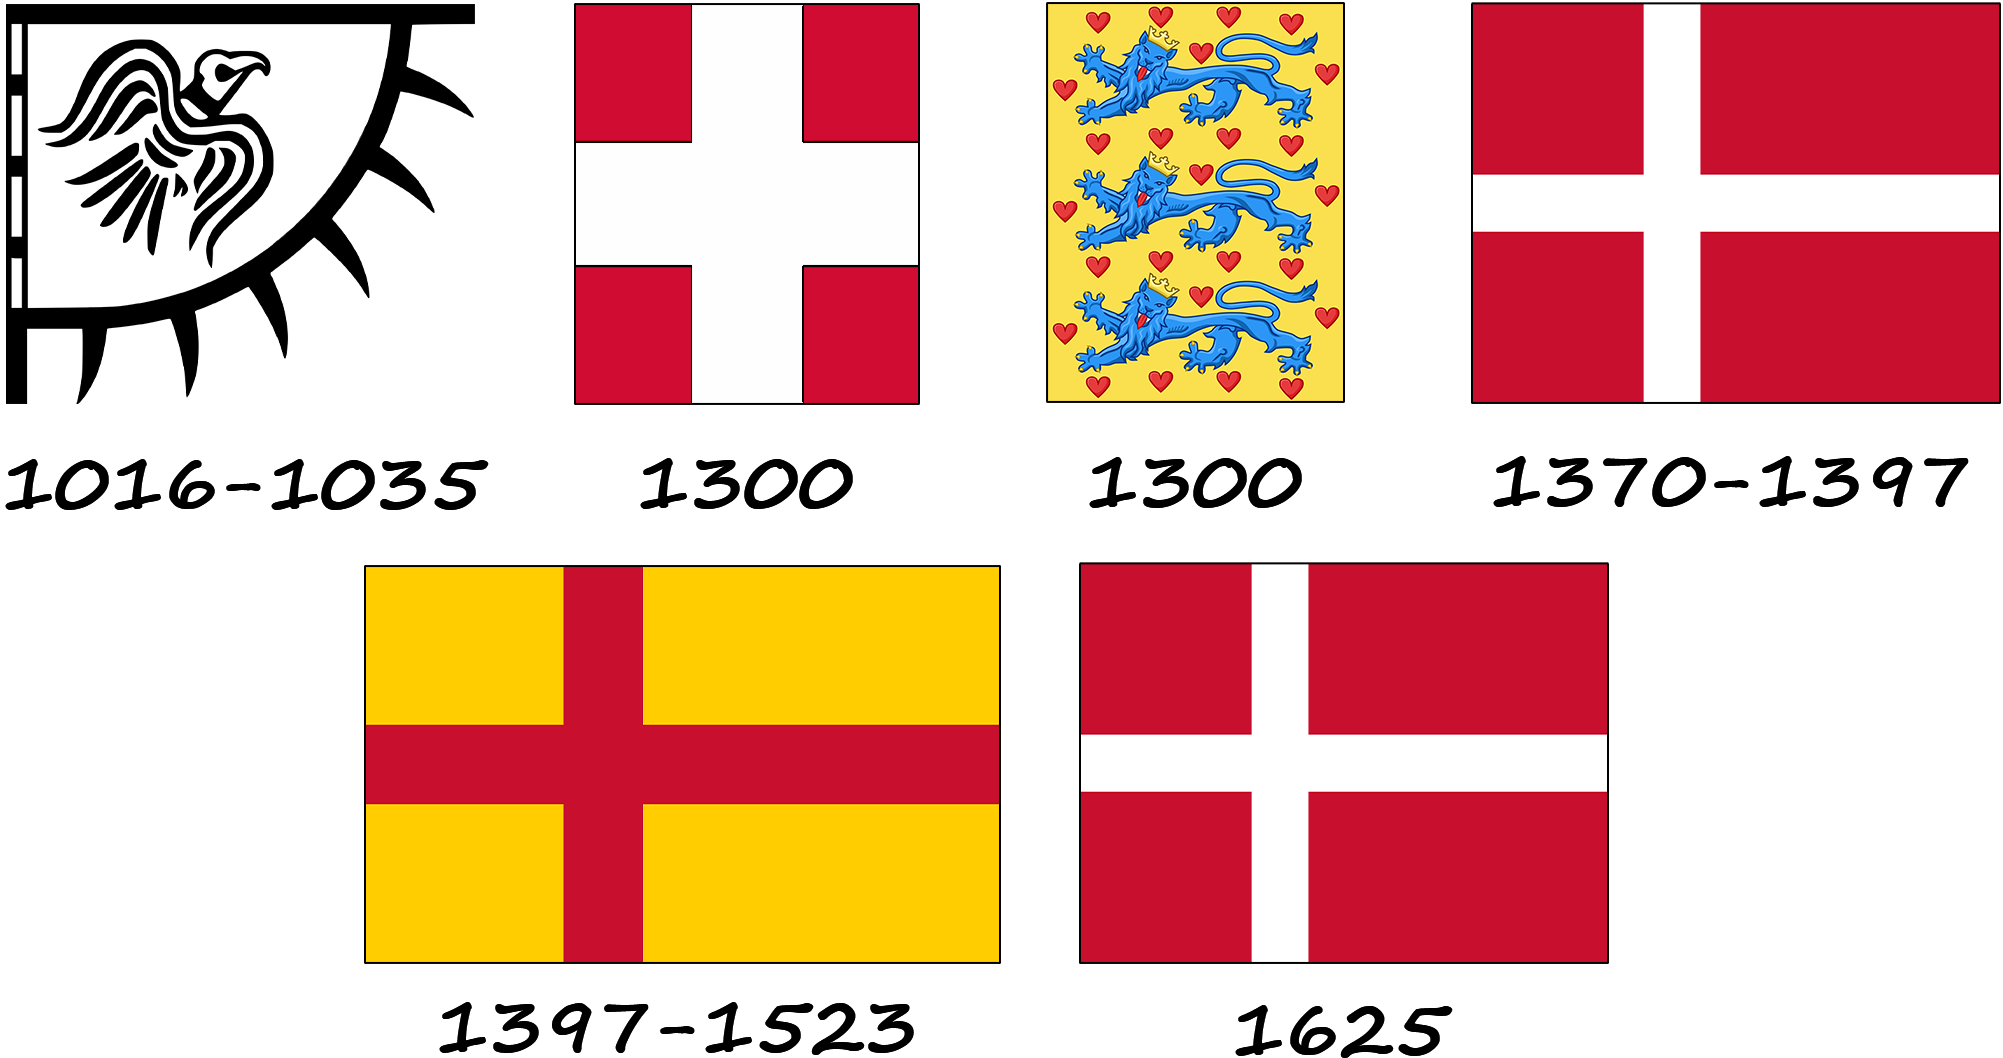 The evolution of the Danish flag